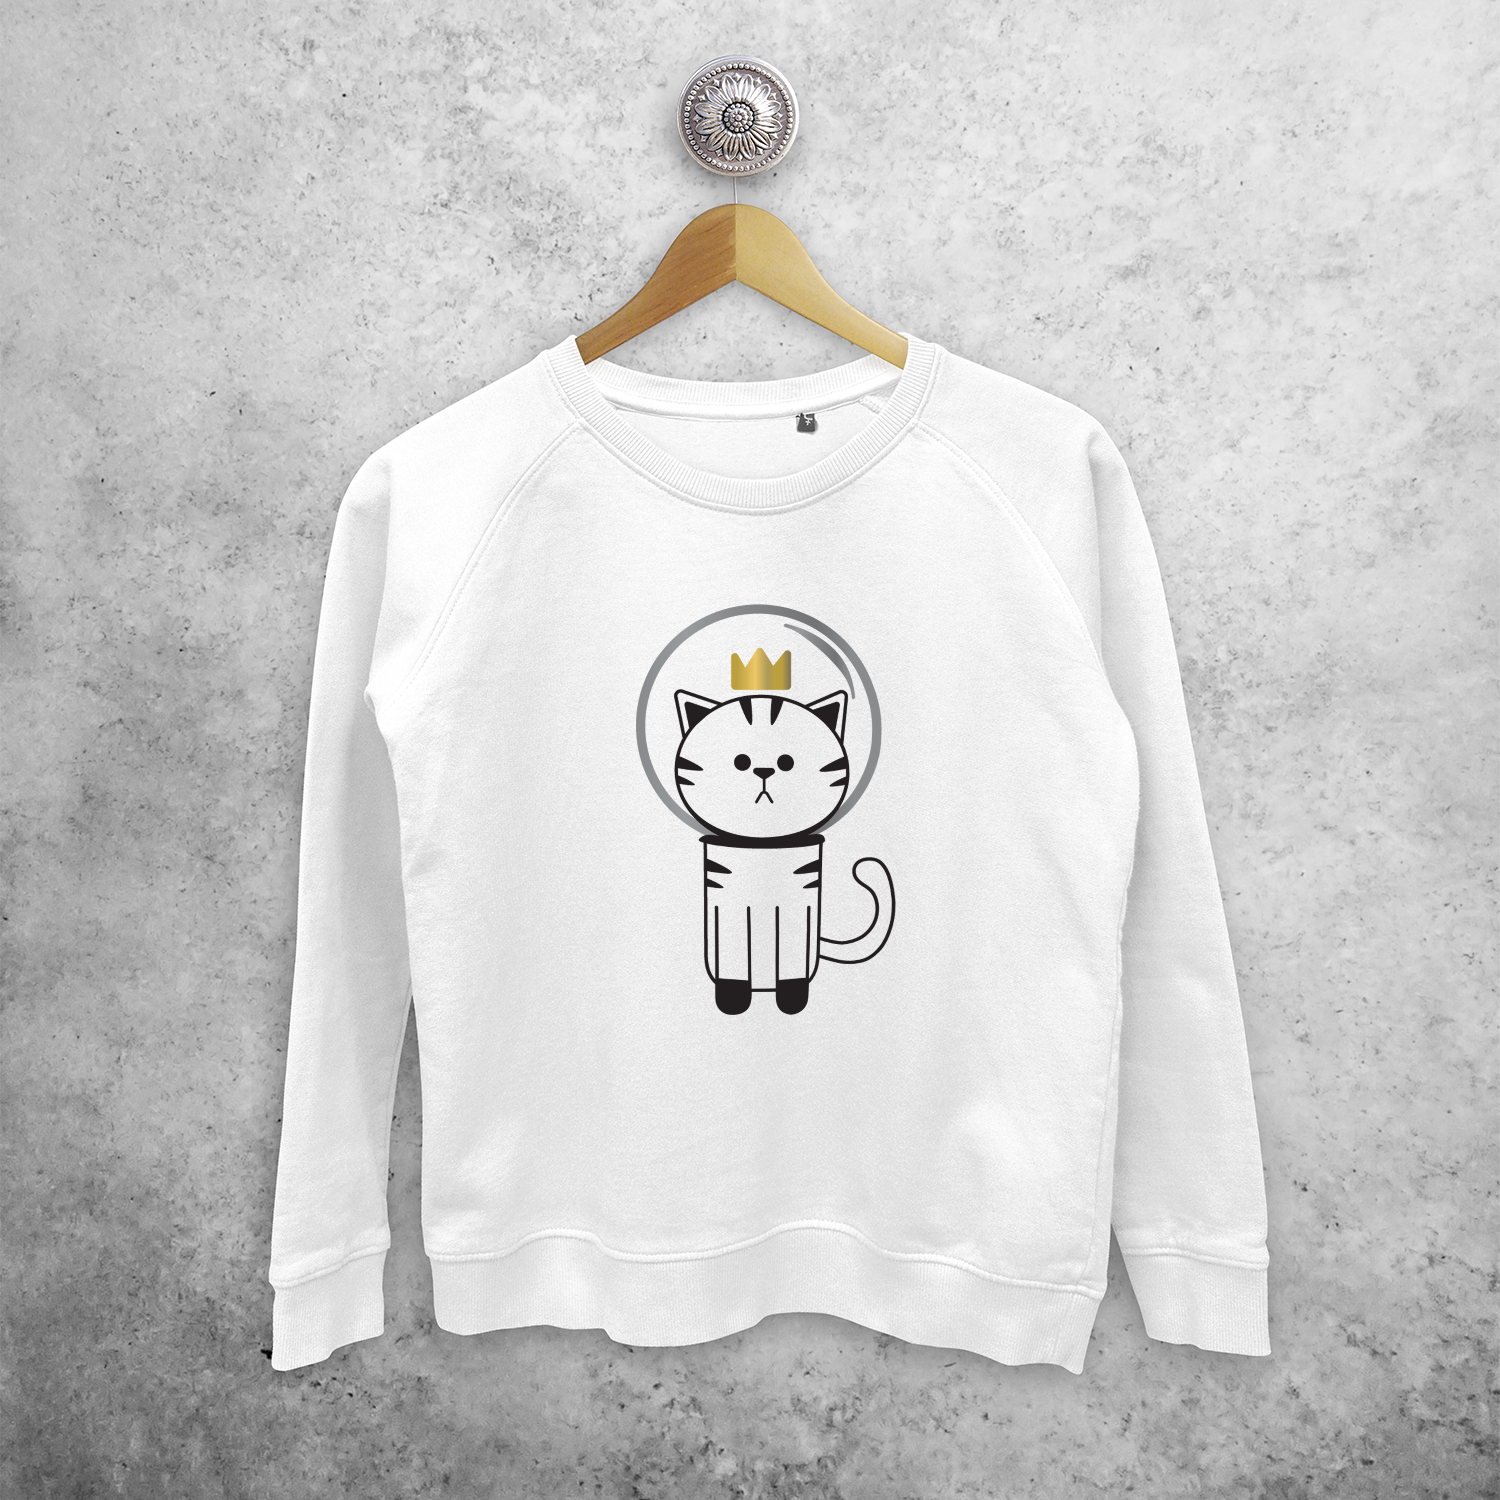 Space cat sweater